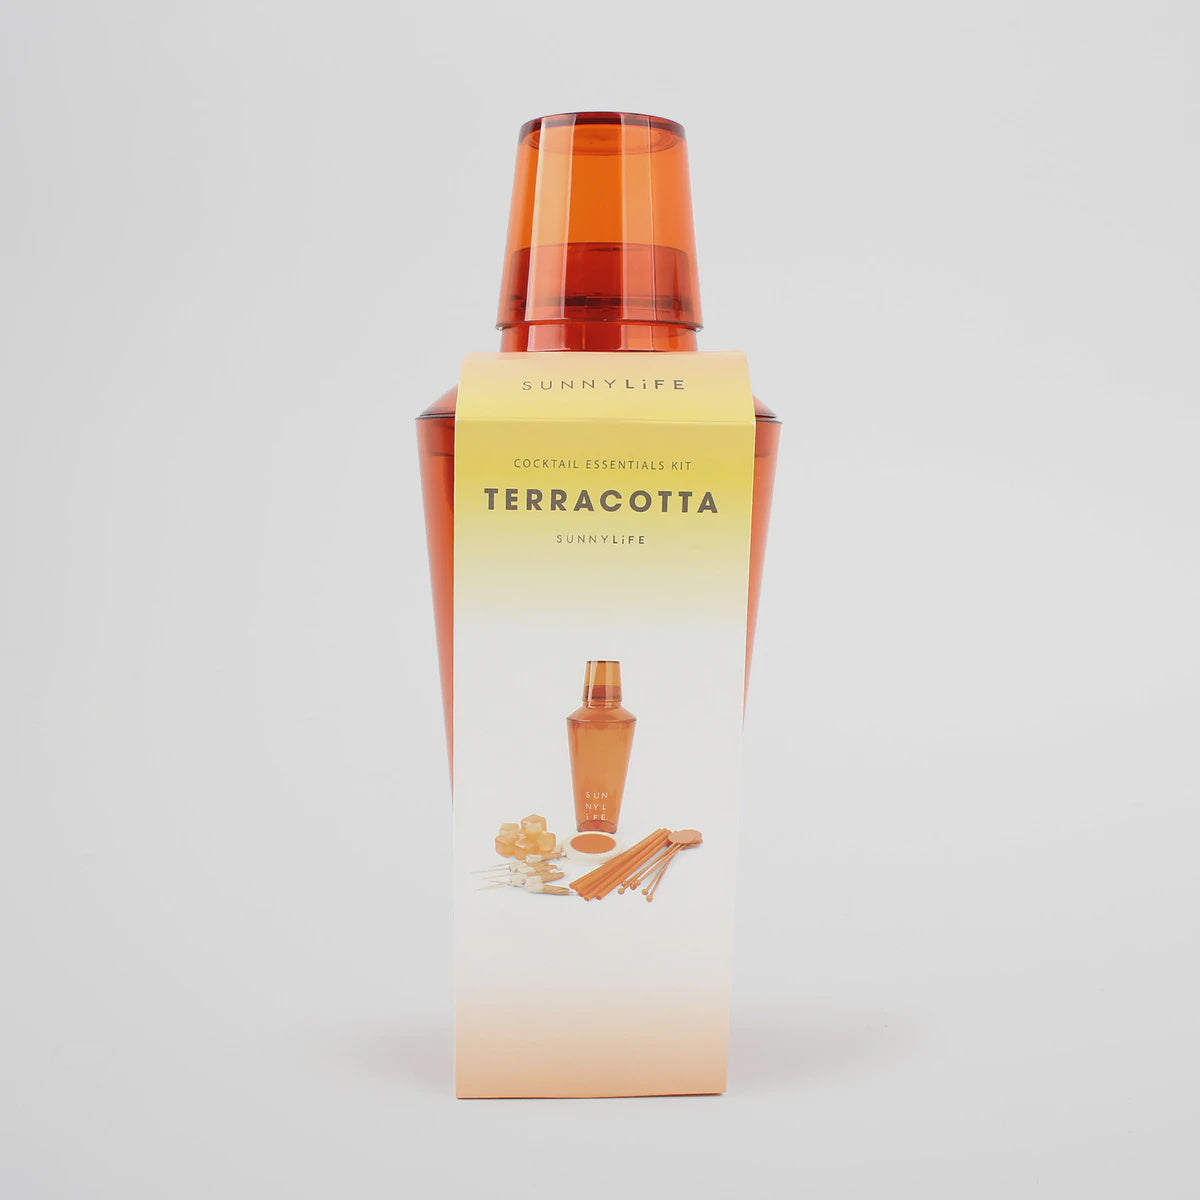 Sunnylife Terracotta Cocktail Essentials Kit